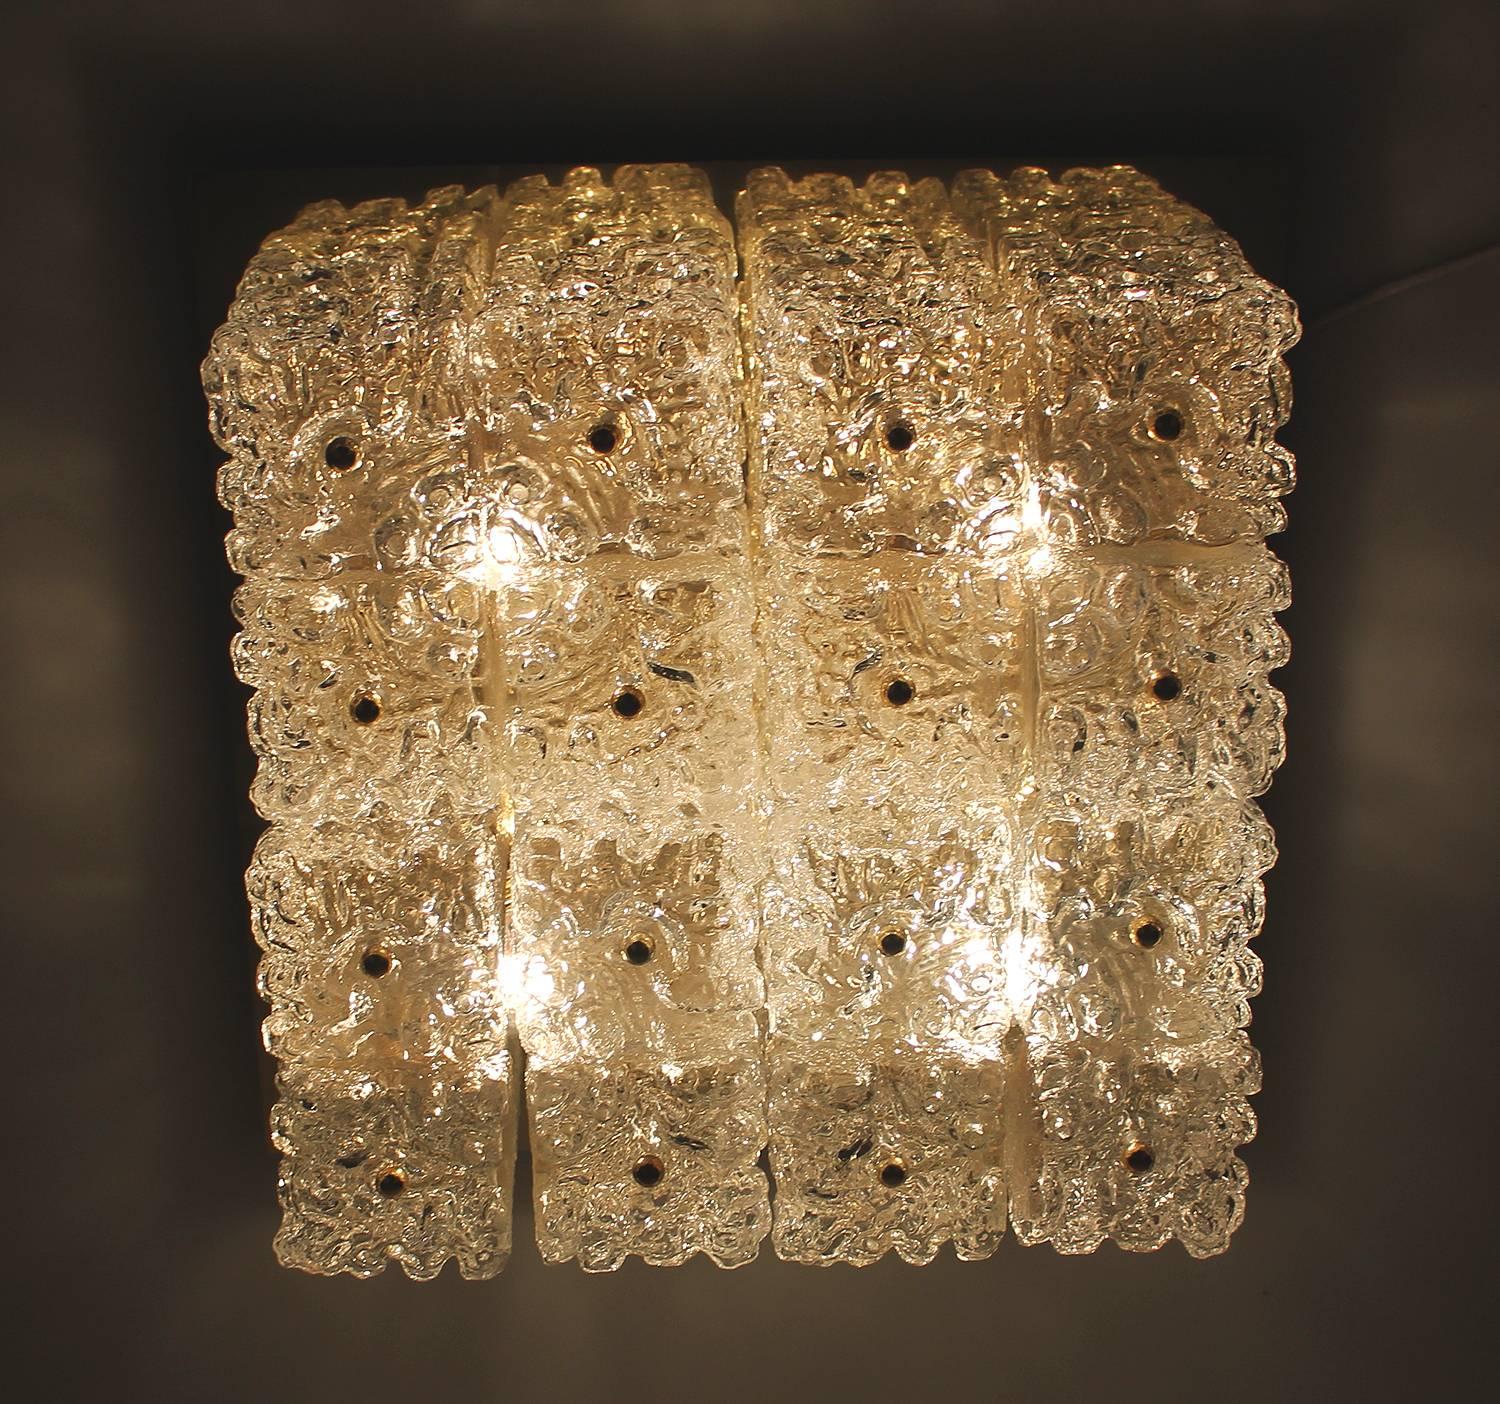  Large MidCentury Square Limburg Brass Glass Ceiling Light, Gio Ponti Era  5